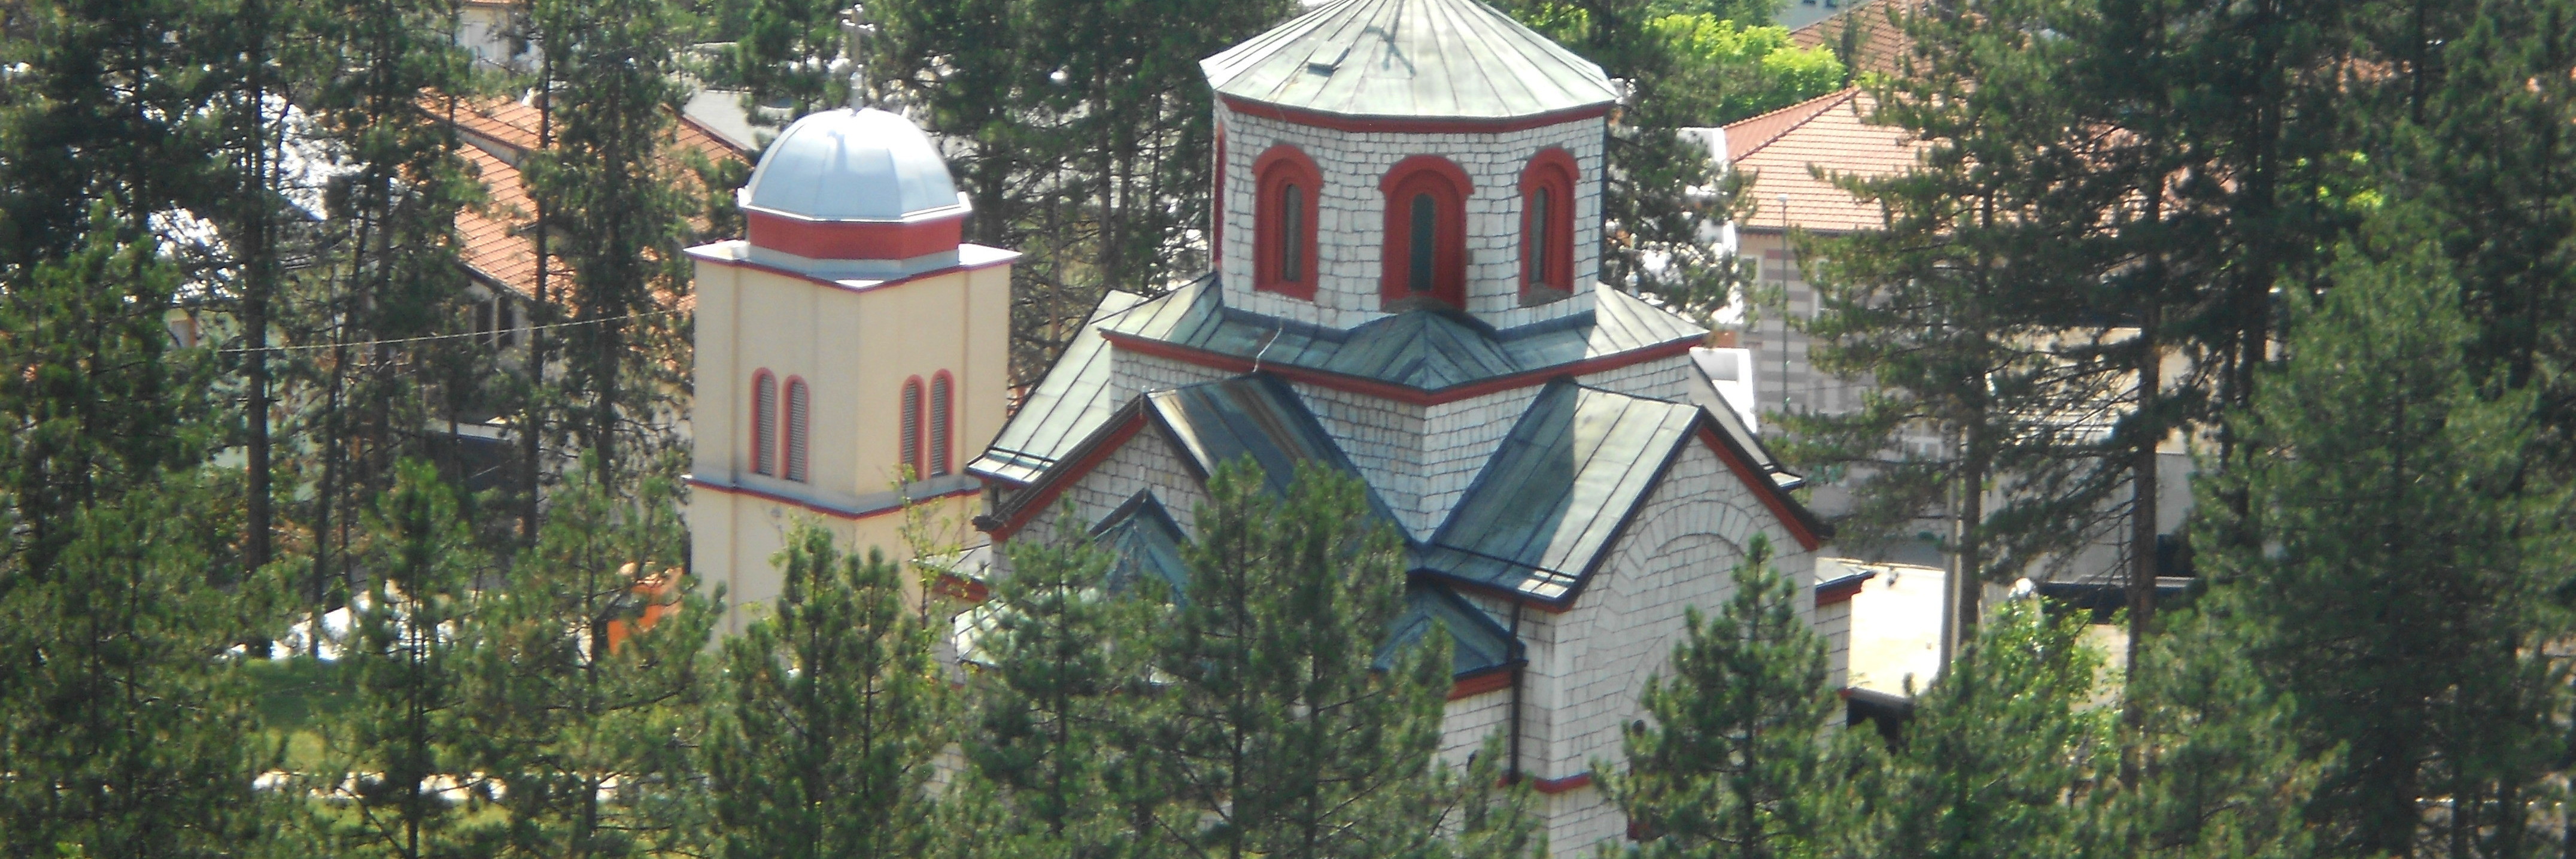 Церковь Покрова Пресвятой Богородицы в Тешане. Фото: Елена Арсениевич, CC BY-SA 3.0